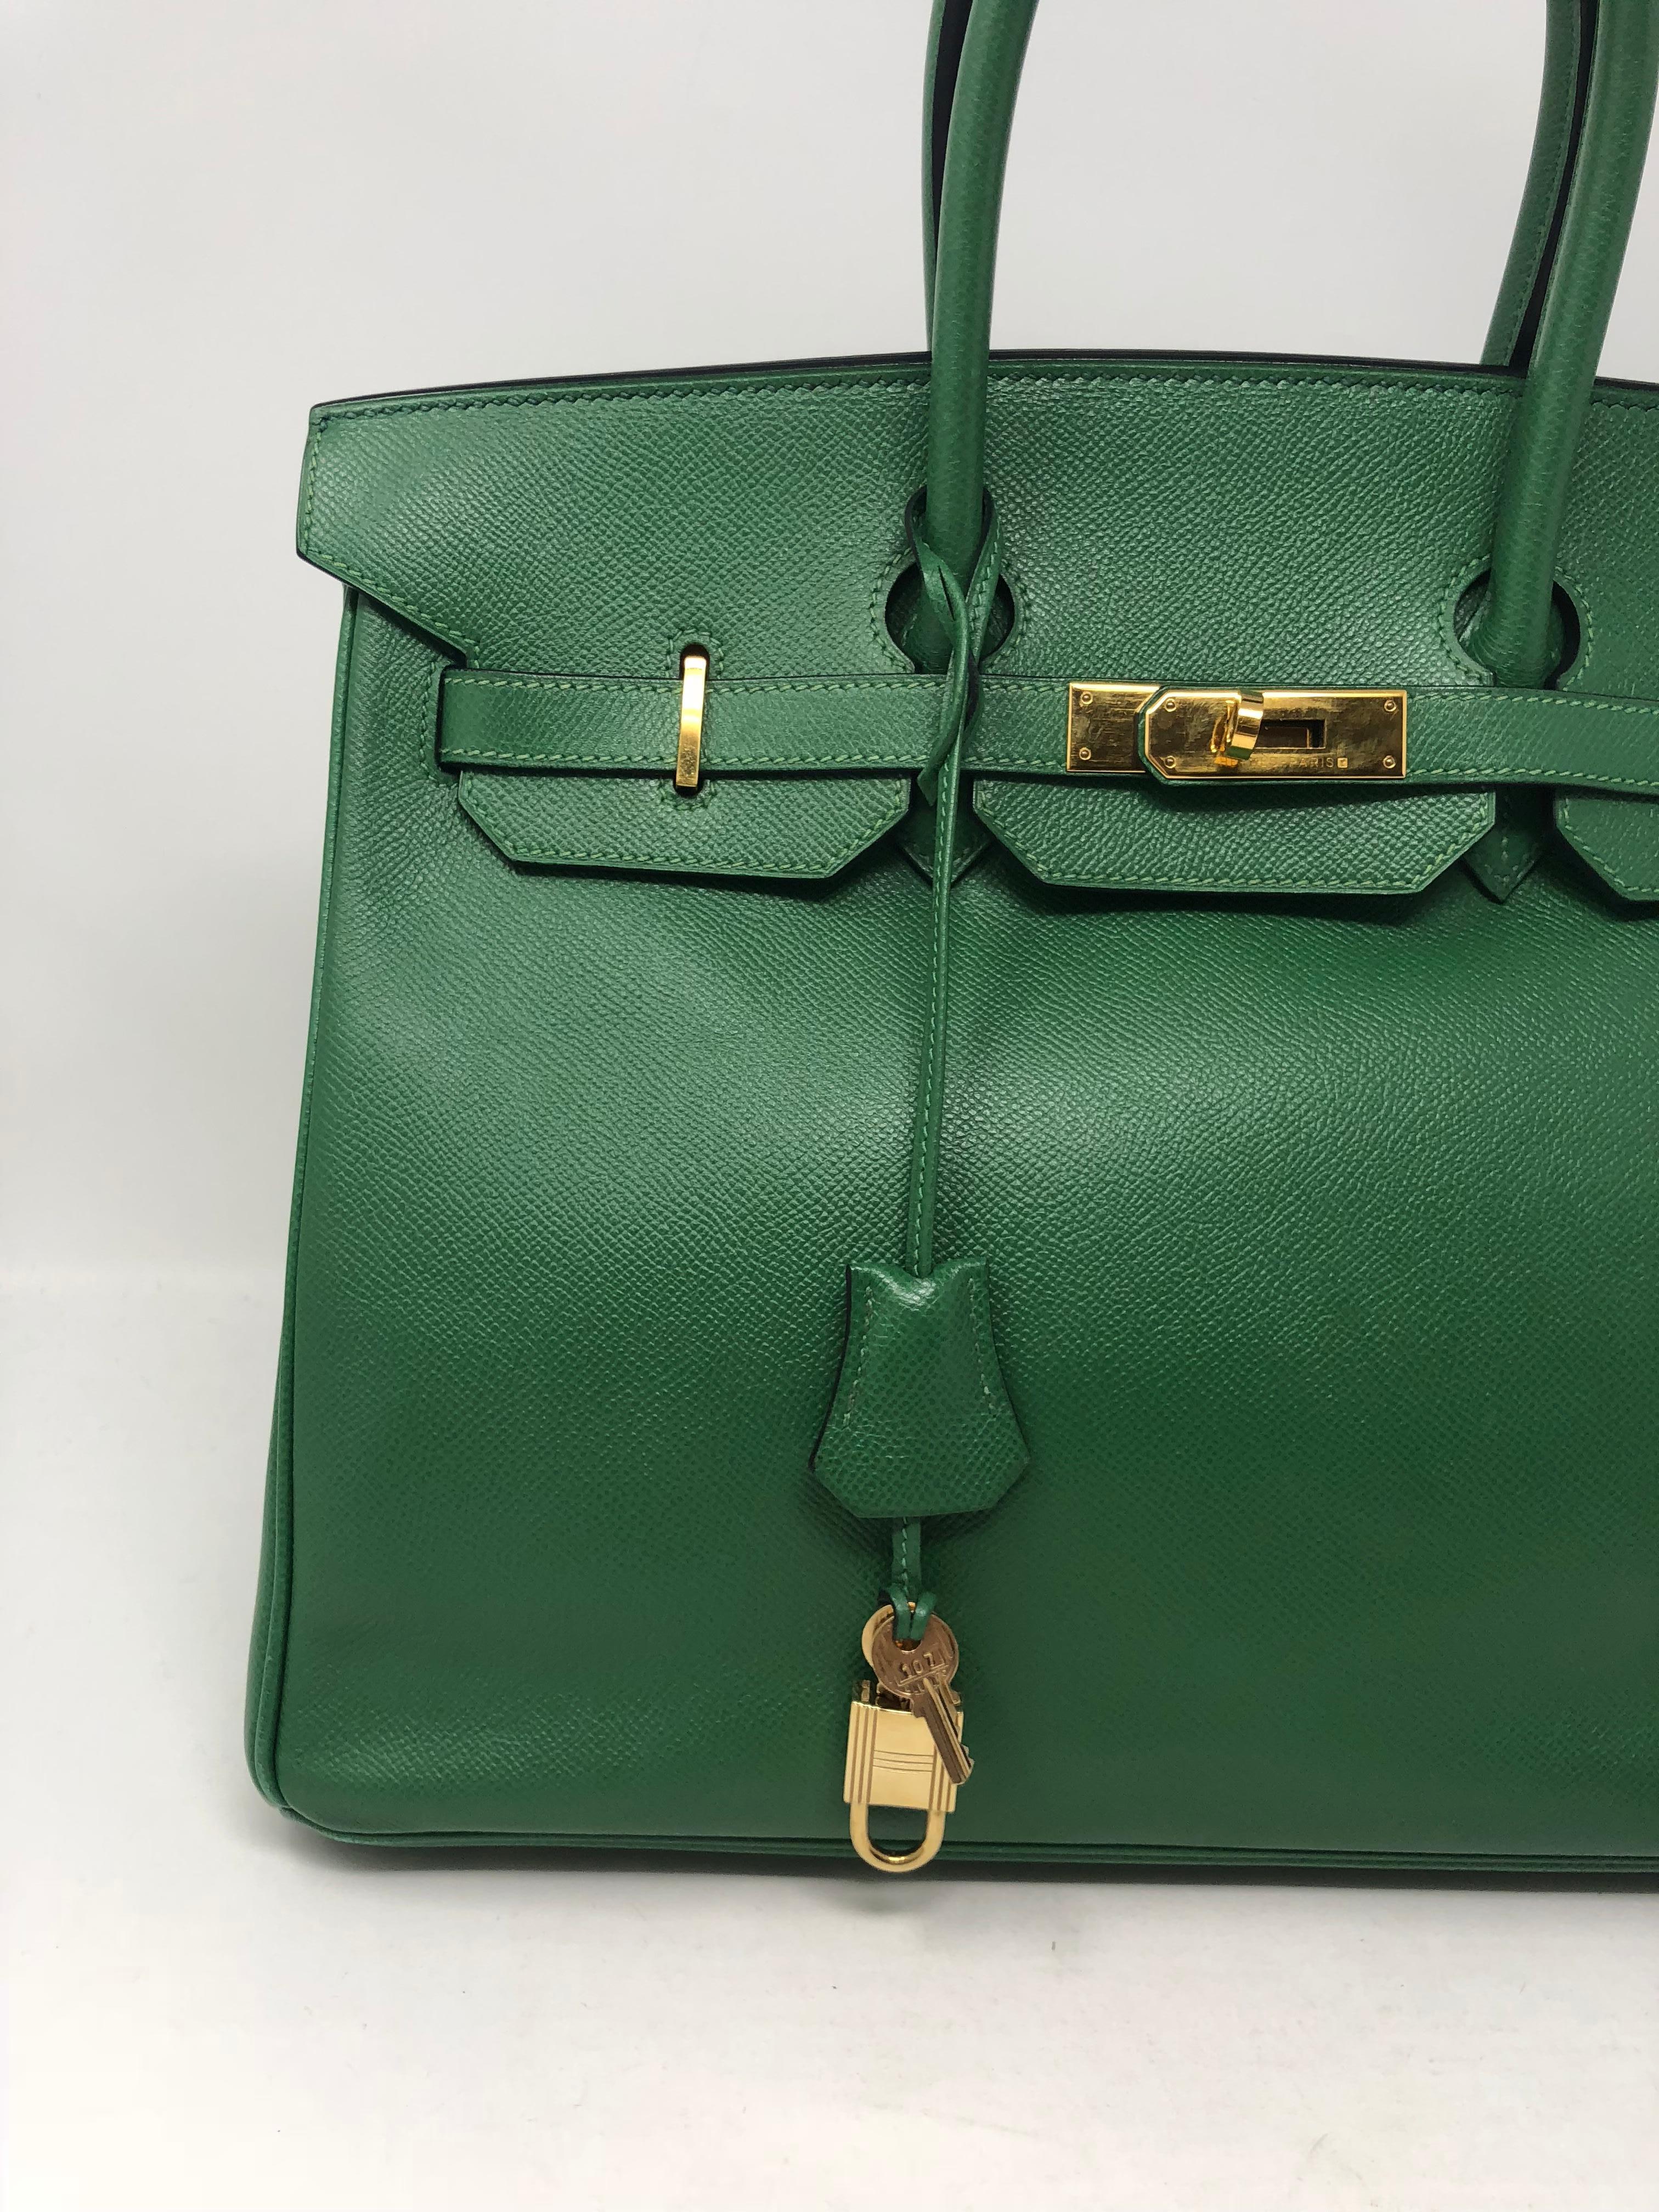 Blue Hermes Emerald Green courchevel leather Gold hardware Birkin 35 Bag